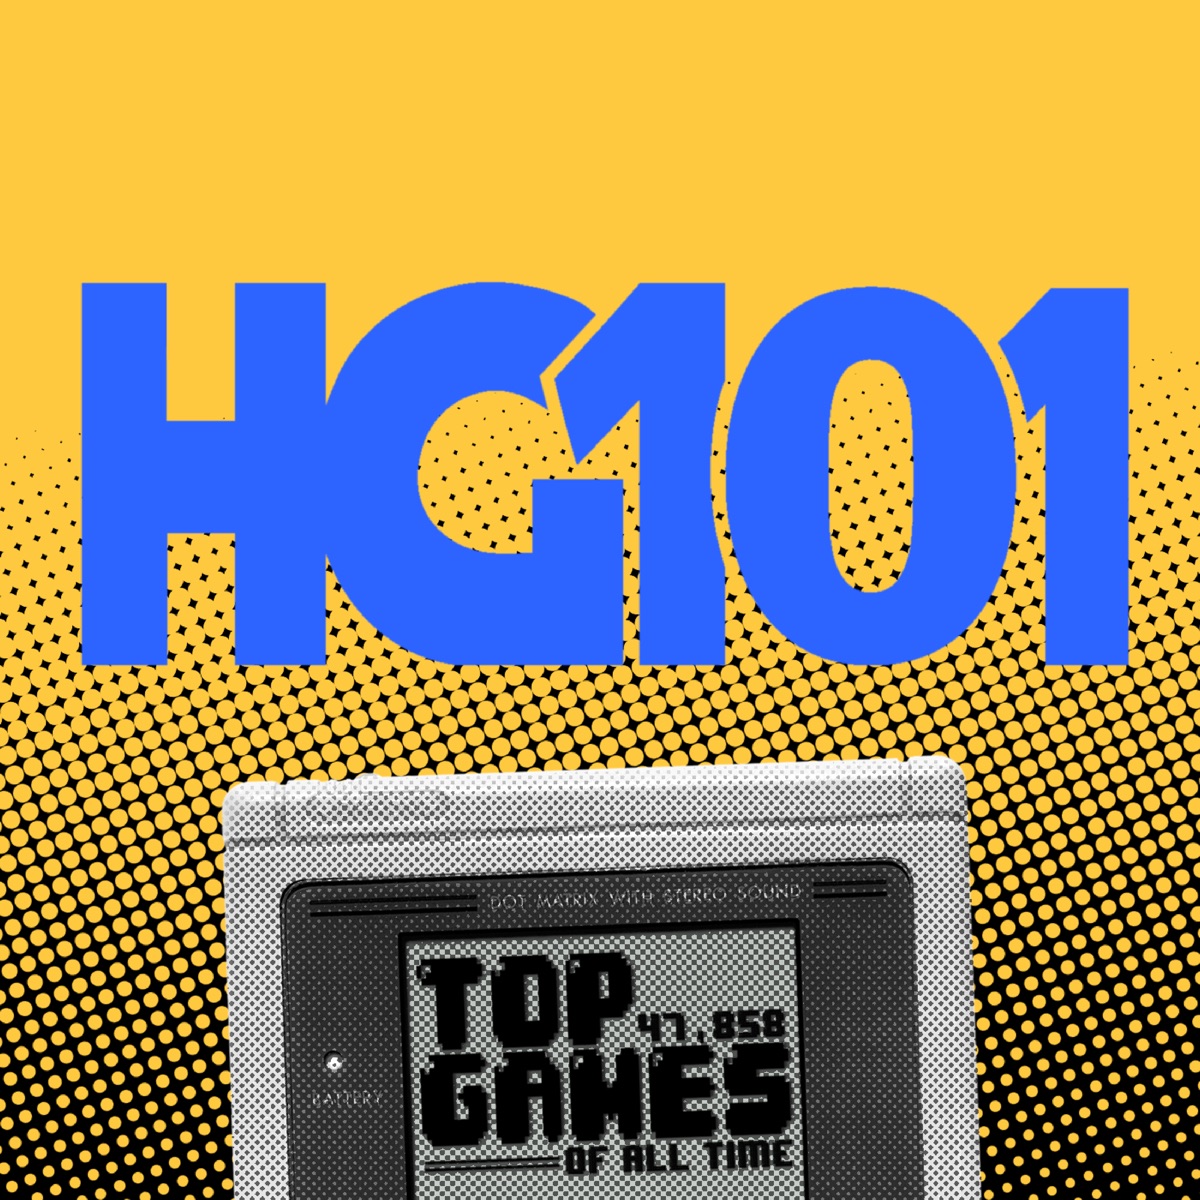 Sonic R – Hardcore Gaming 101